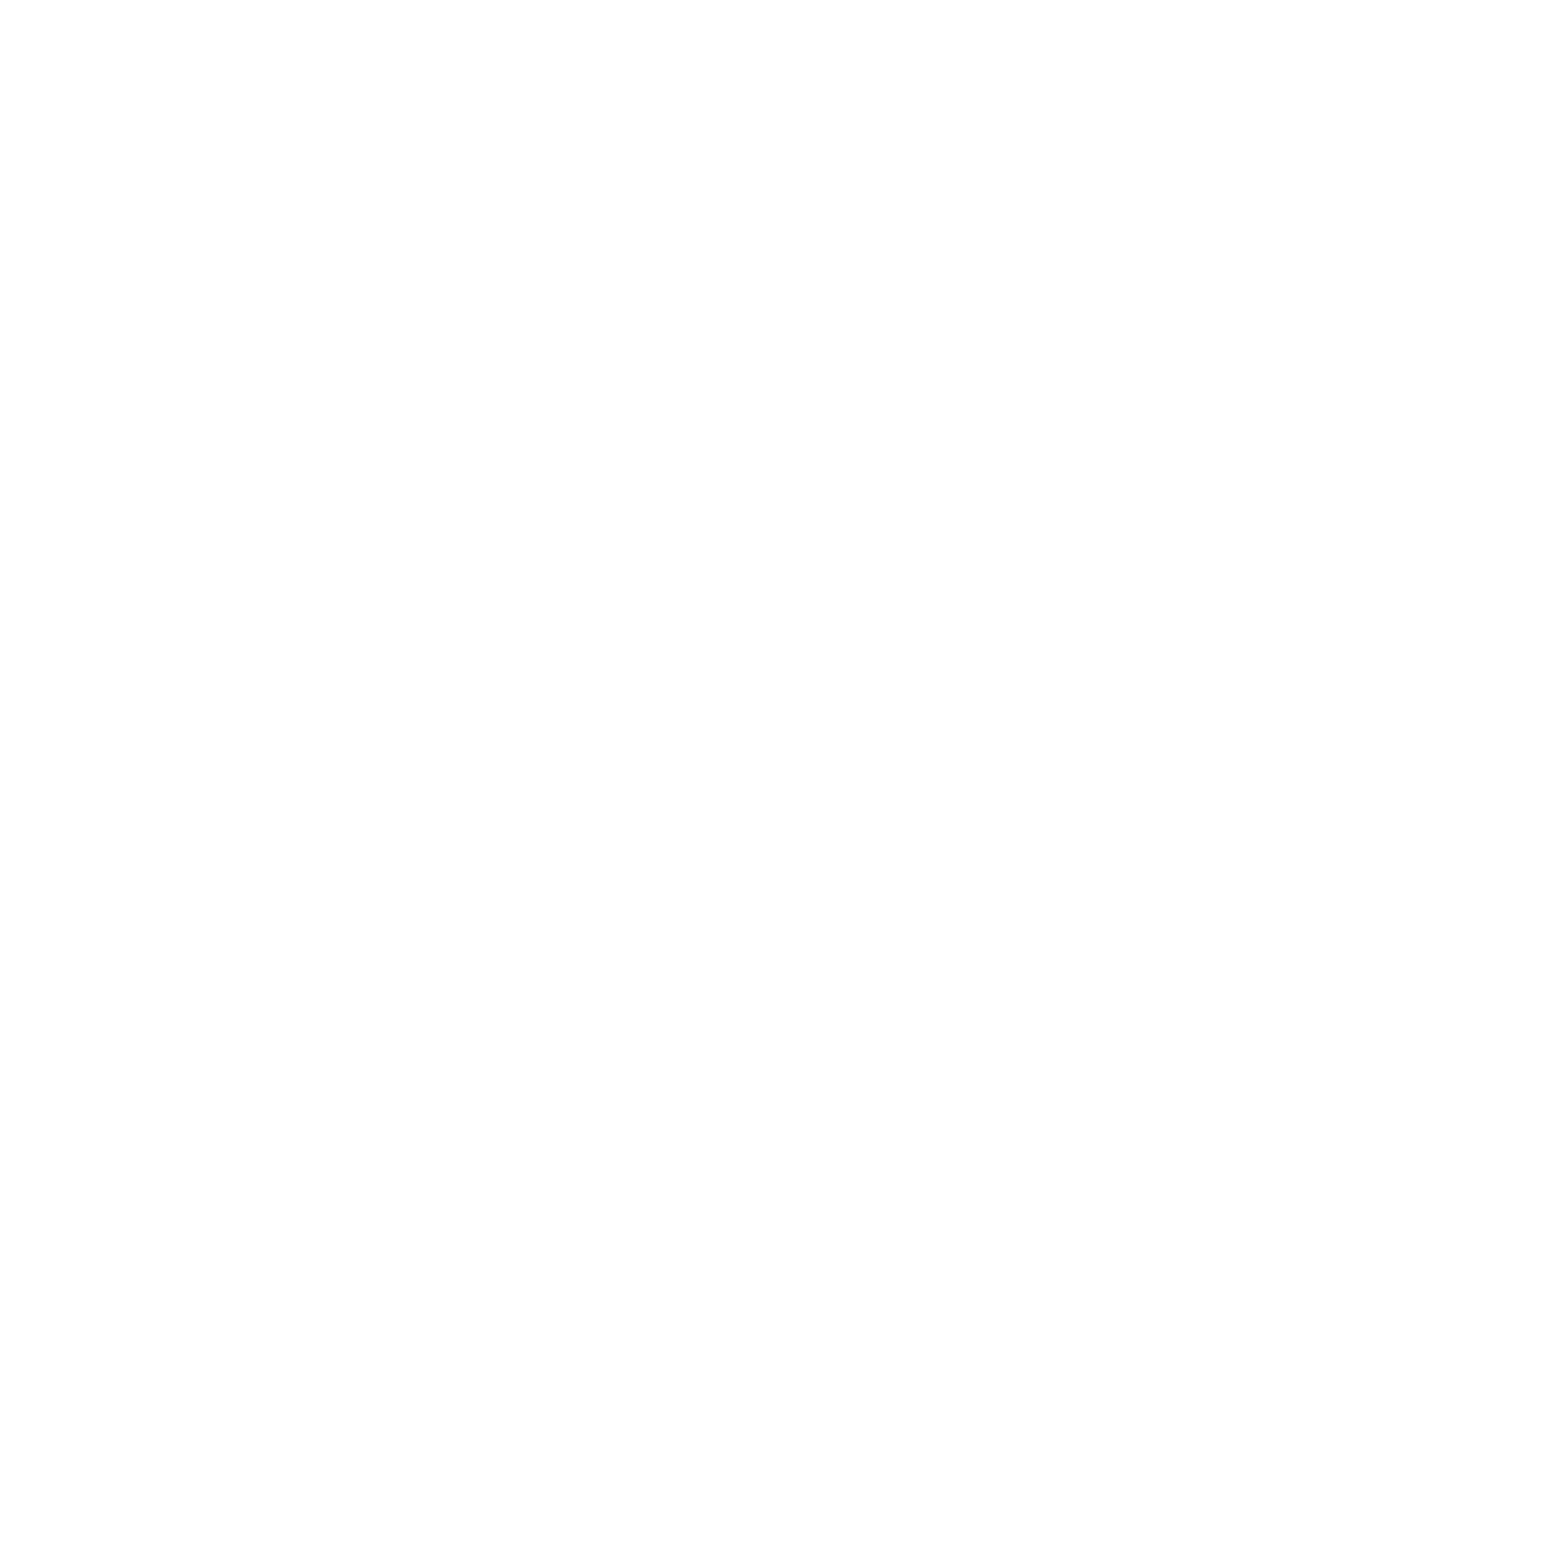 IOI Corporation Berhad logo for dark backgrounds (transparent PNG)